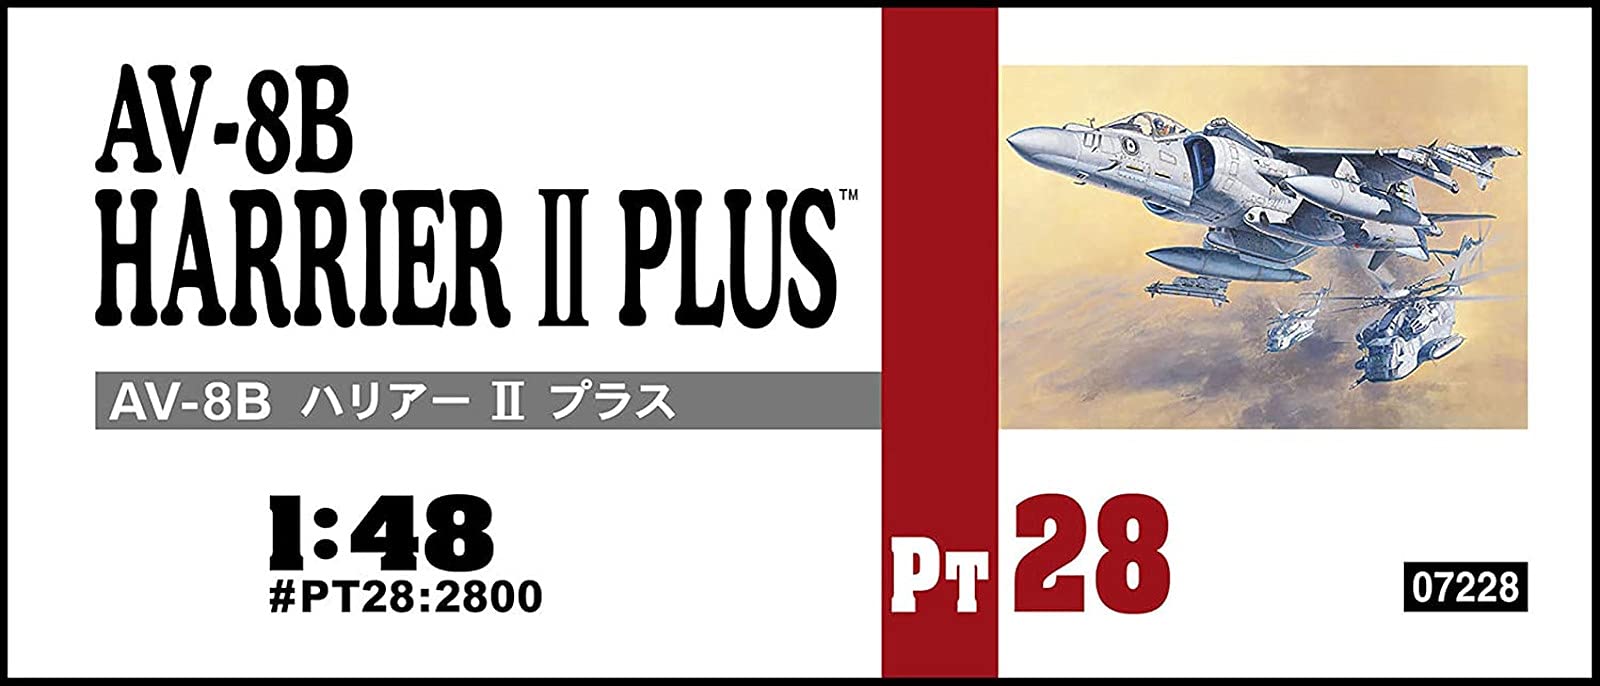 HASEGAWA 1/48 Av-8B Harrier Ii Plus U.S.M.C. Attacker Plastic Model